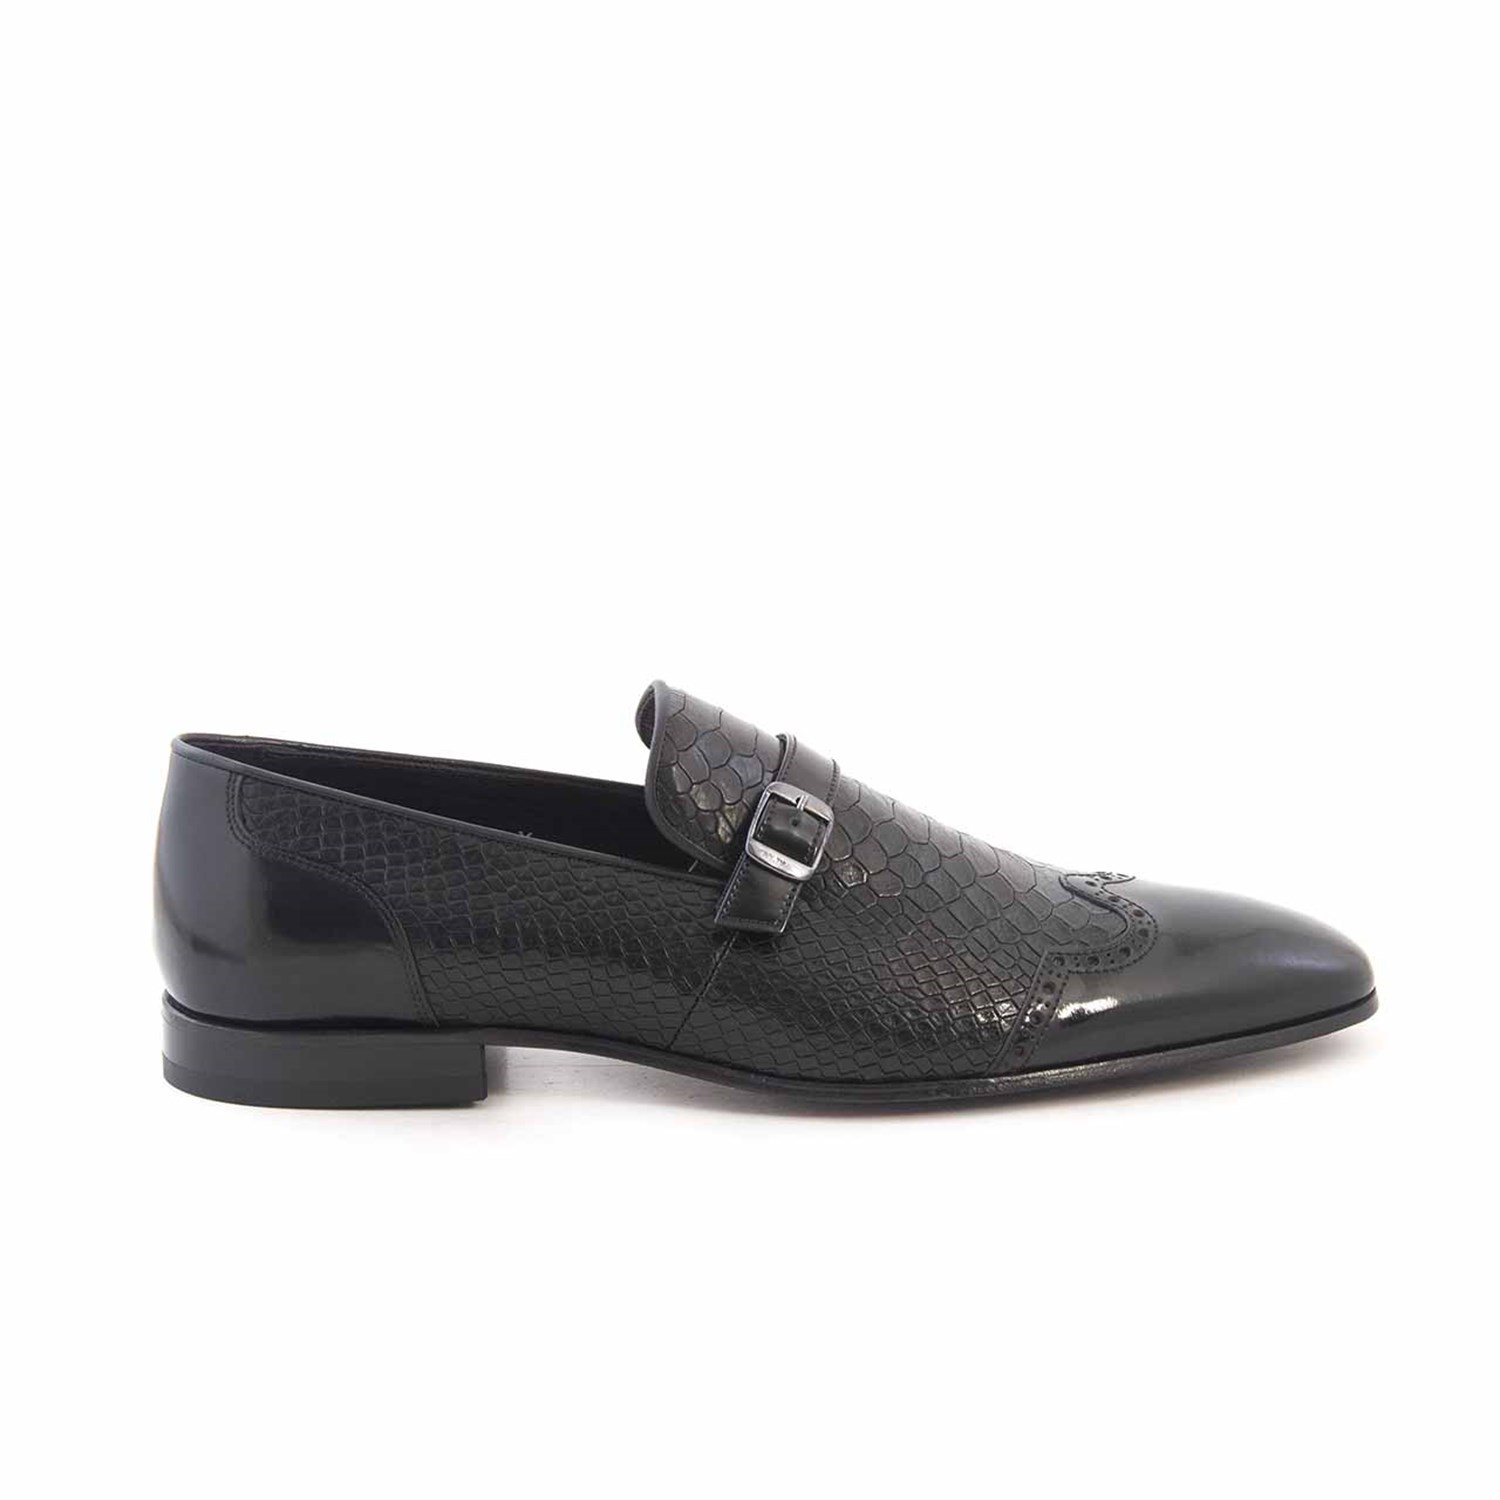 Kemal Tanca Leather Men's Classic Shoes